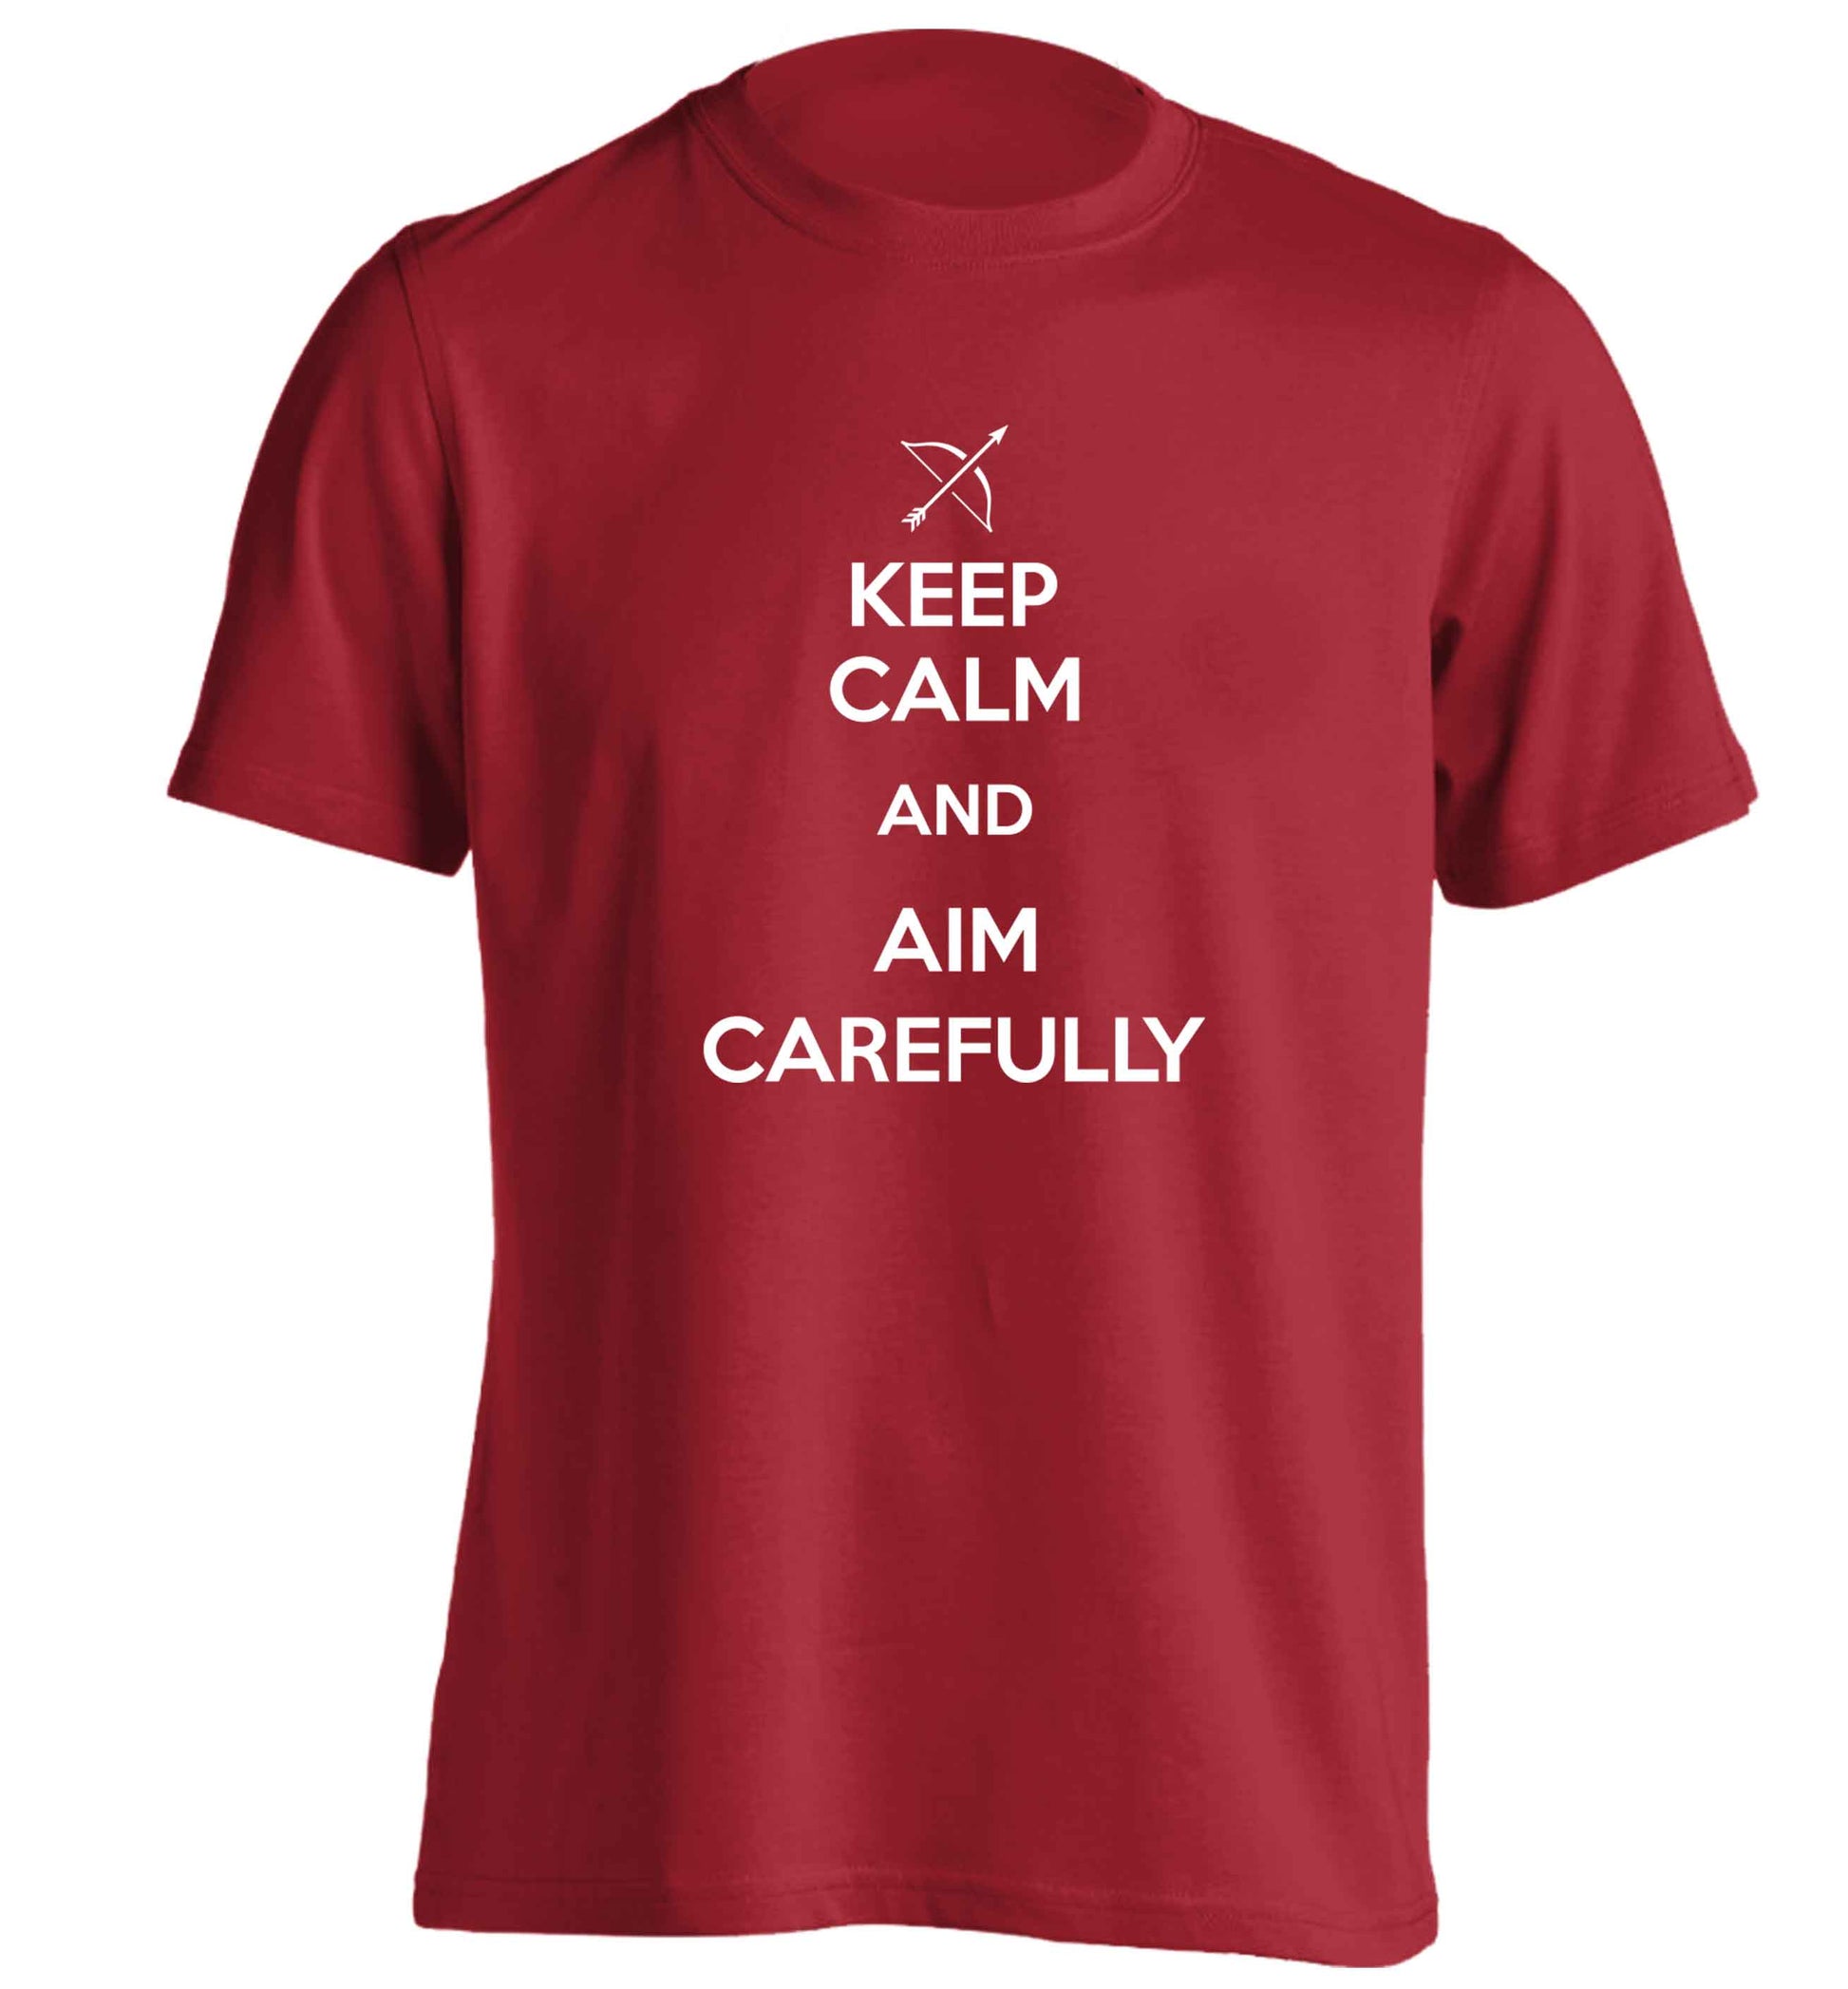 Keep calm and aim carefully adults unisex red Tshirt 2XL